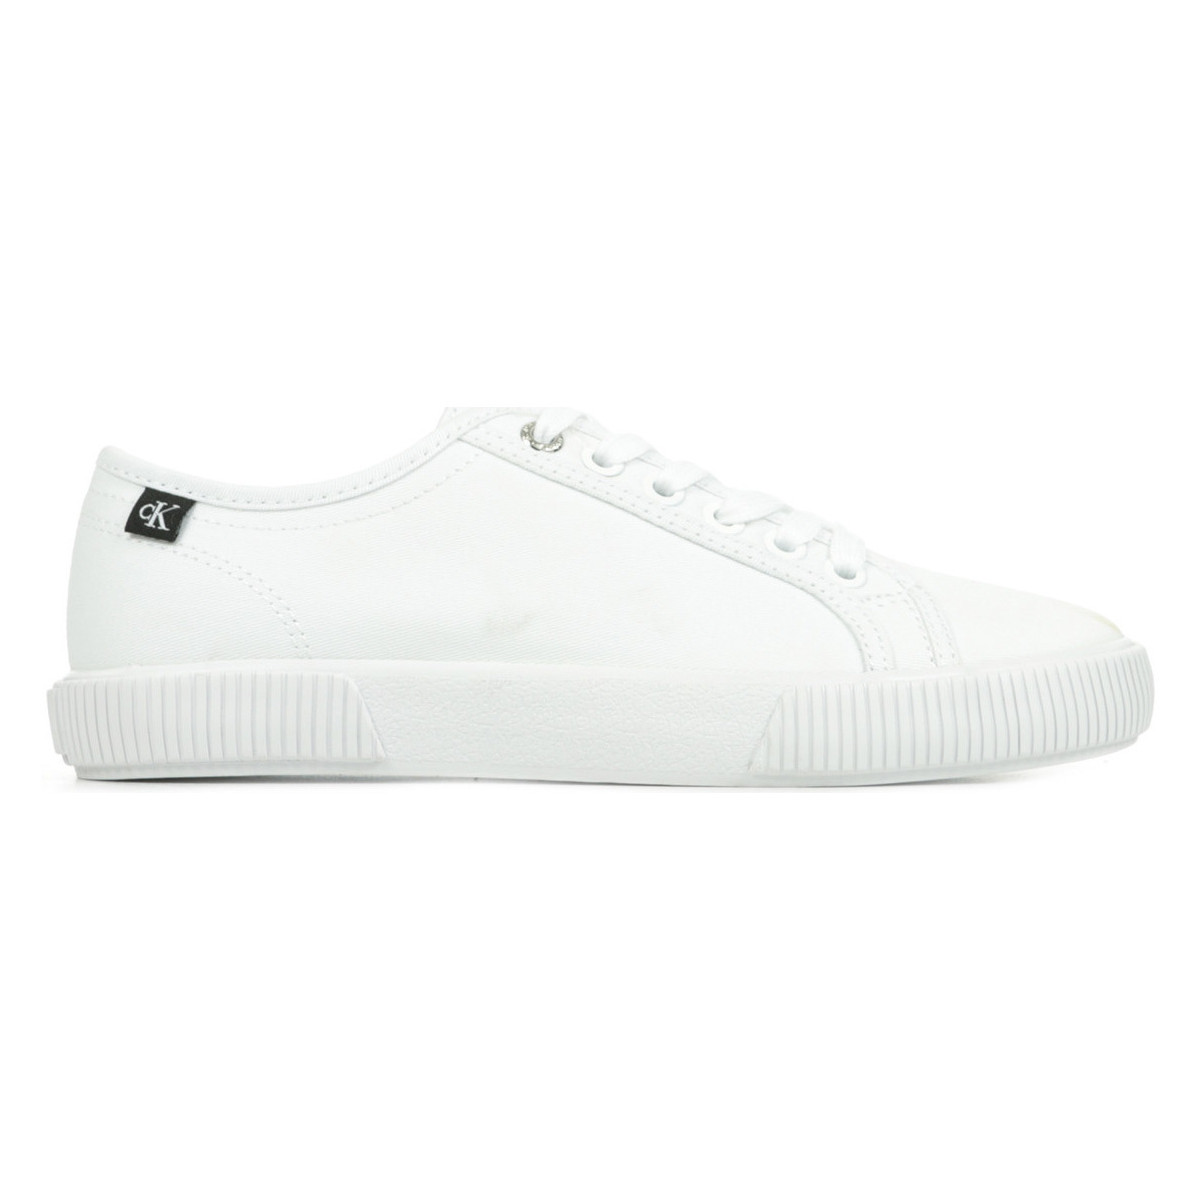 Sapatos Mulher Sapatilhas Calvin Klein Jeans Vulcanized Sneaker Laceup Branco